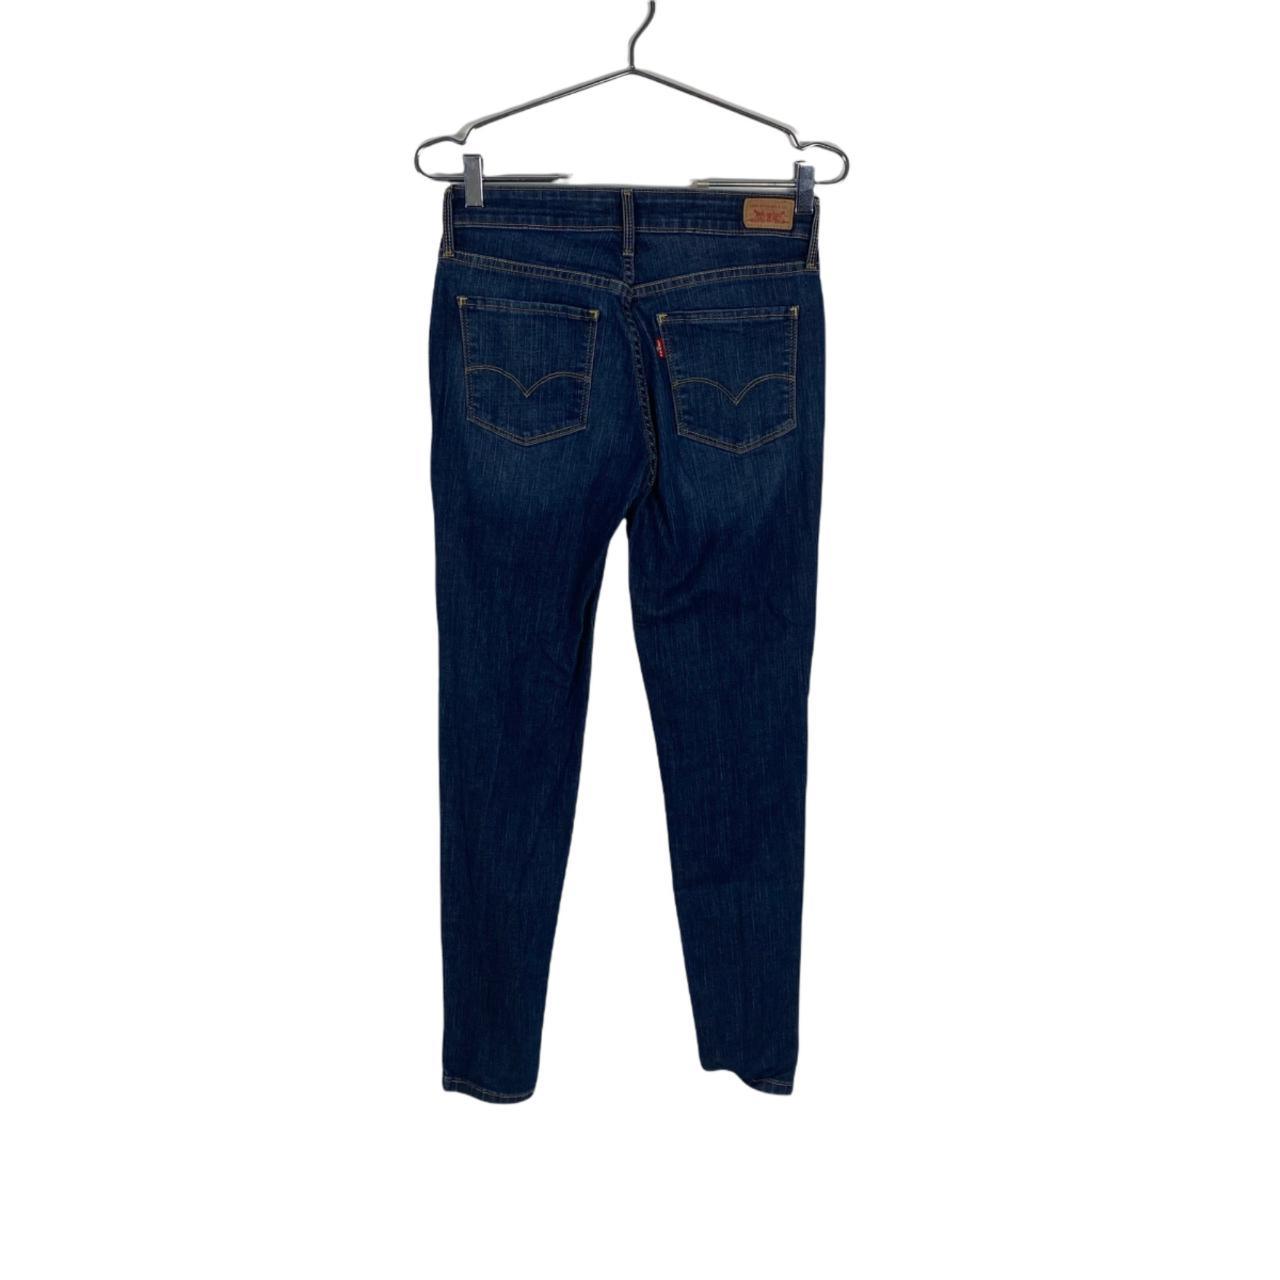 Levi’s Slight Curve Classic Jeans Womens Size 30x31... - Depop